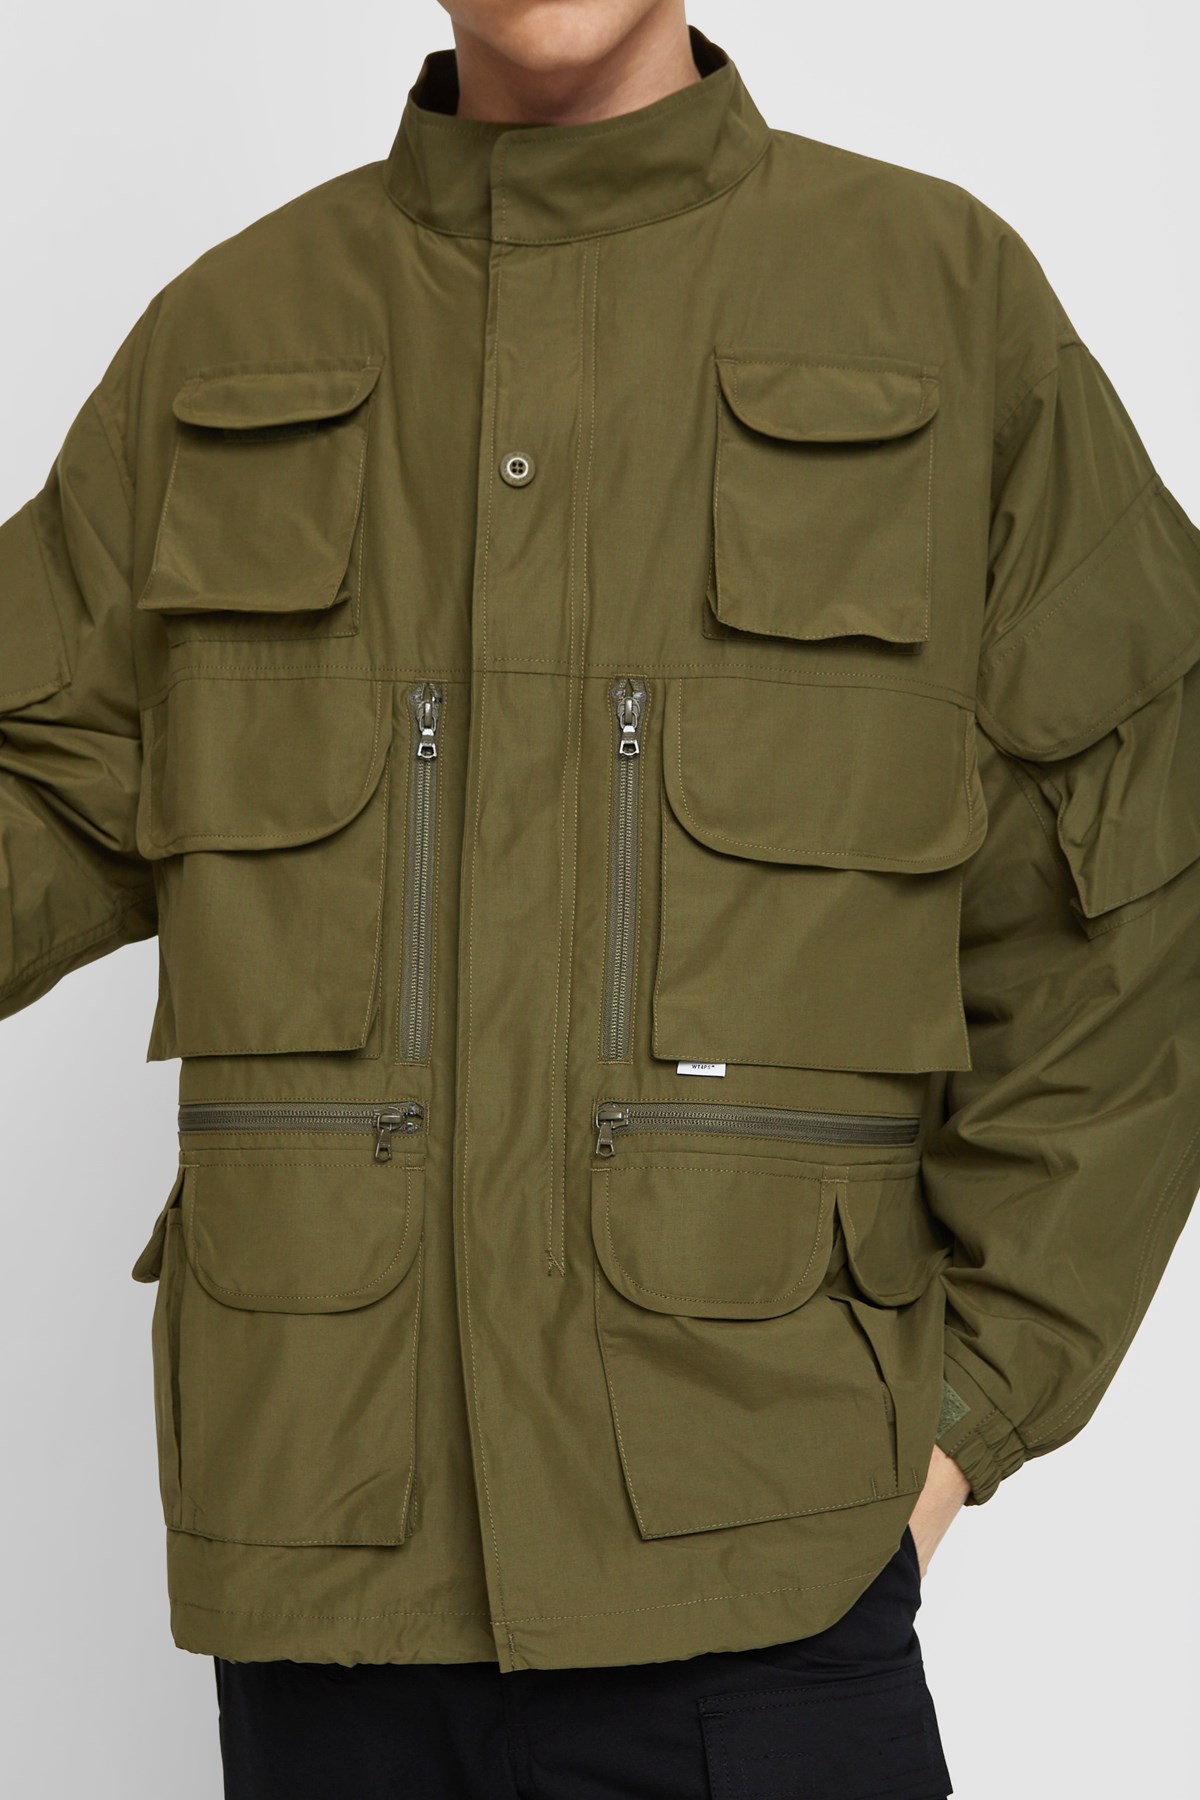 WTAPS Modular / Jacket. Nyco. Tussah Olive drab | WoodWood.com